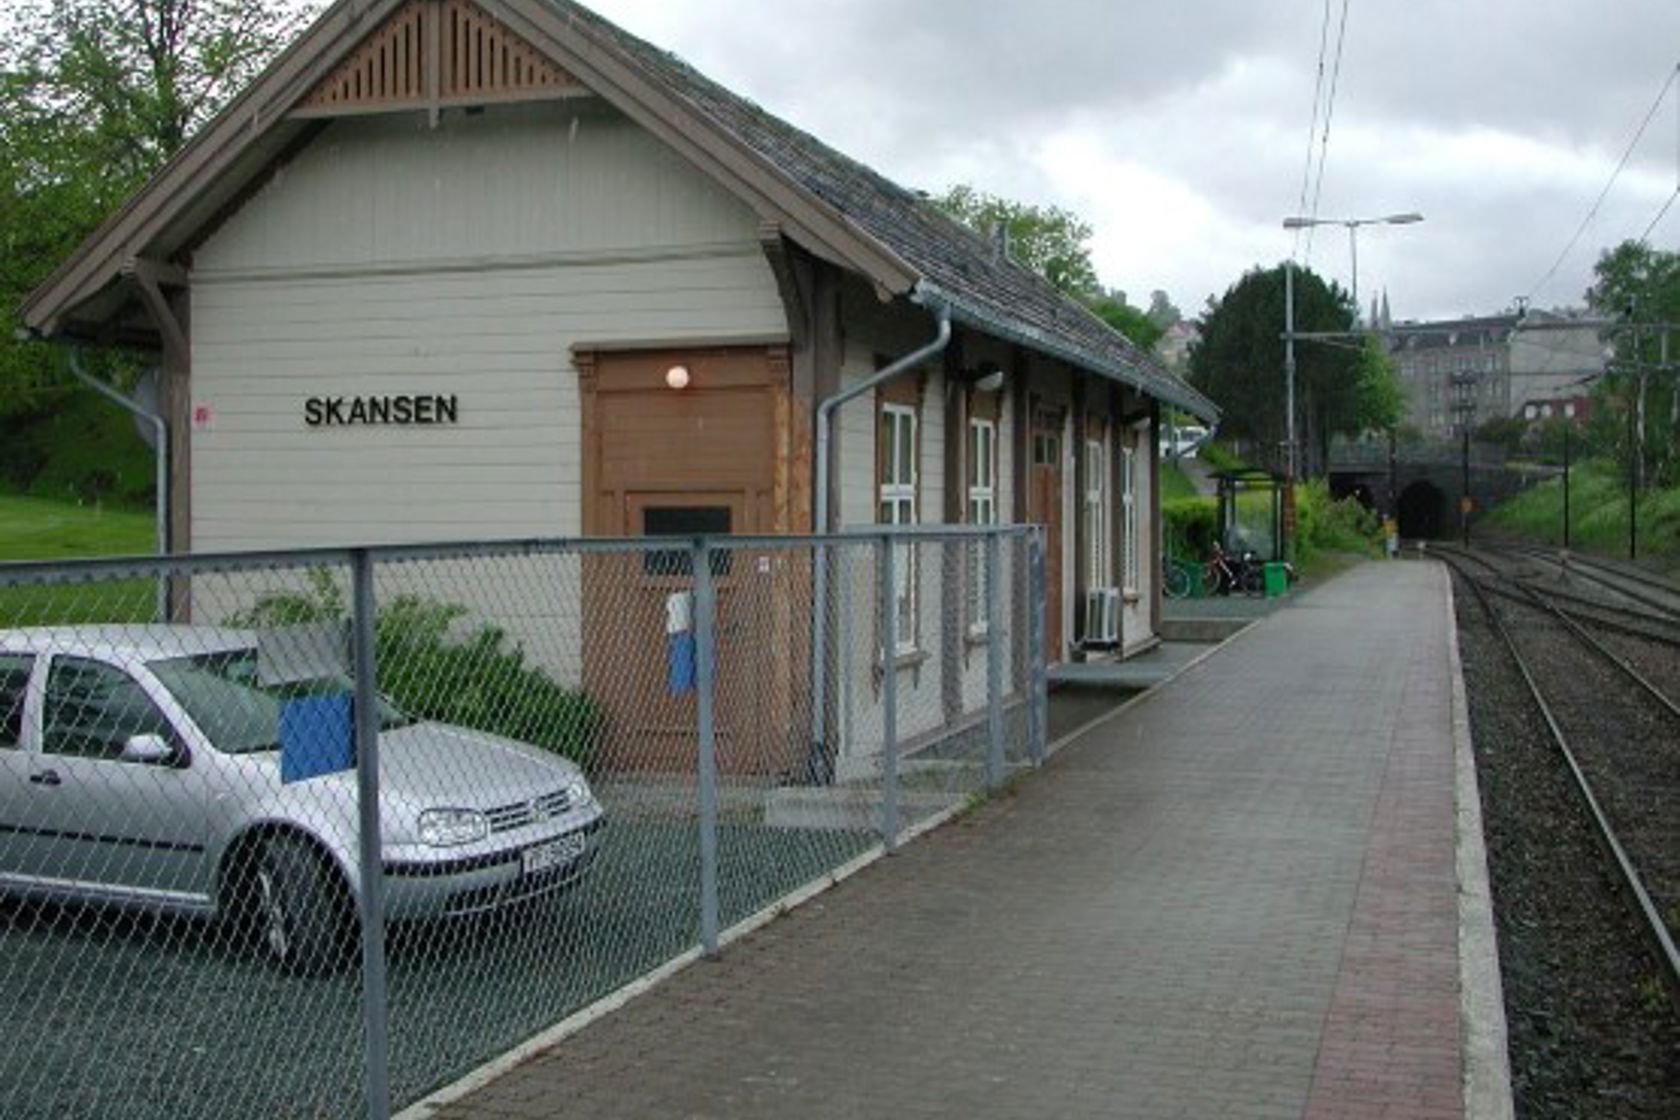 Exterior view of Skanse stop